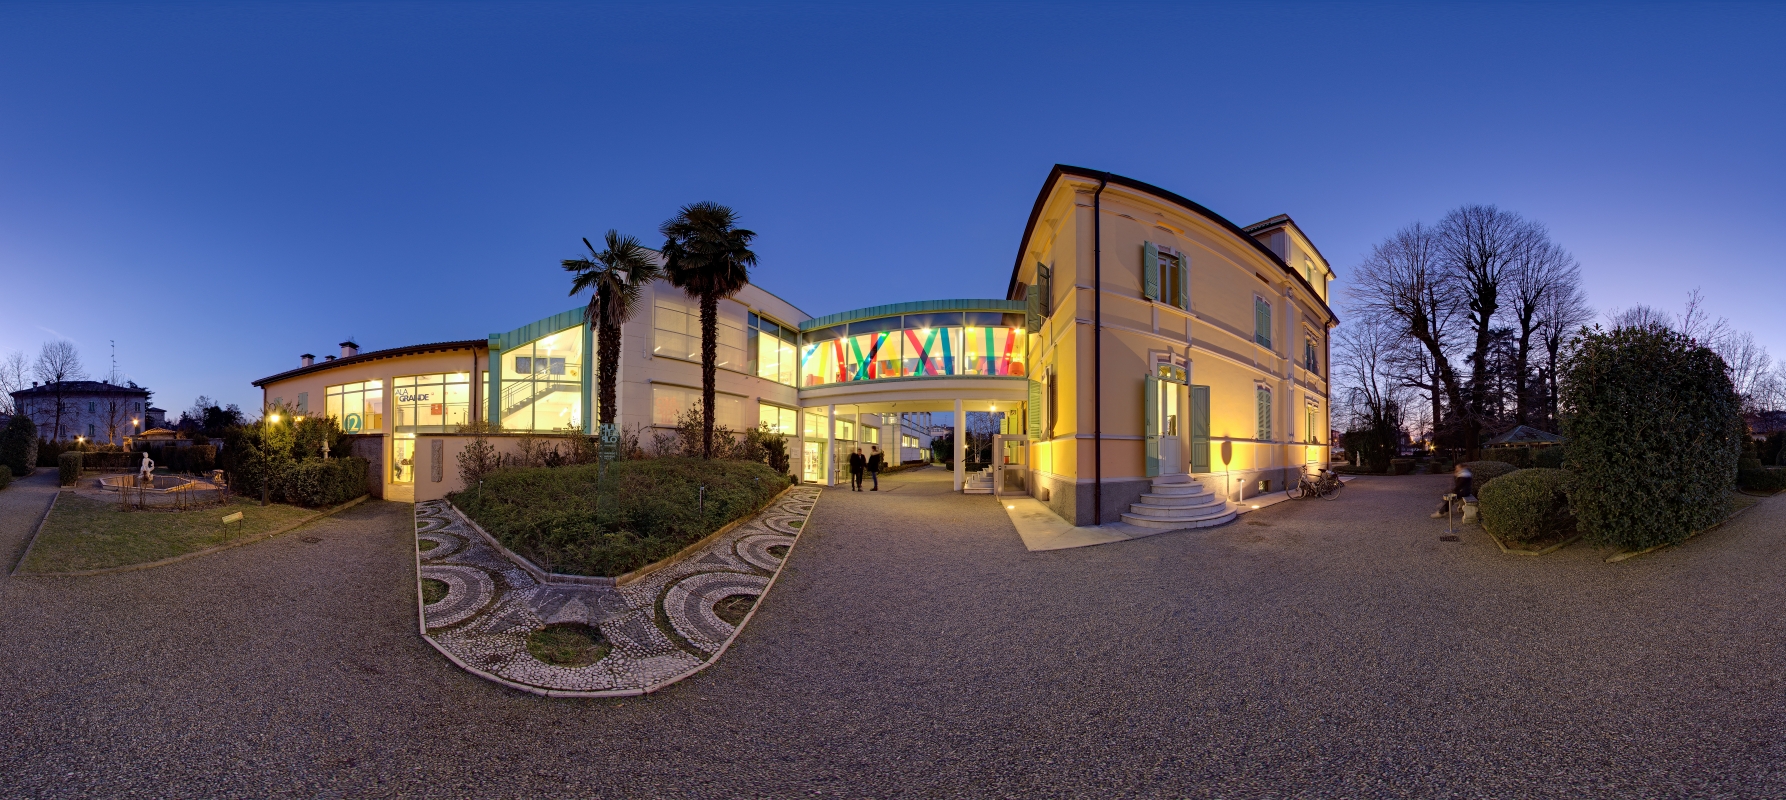 Centro Culturale Multiplo Cavriago - Giuseppe Ferrari